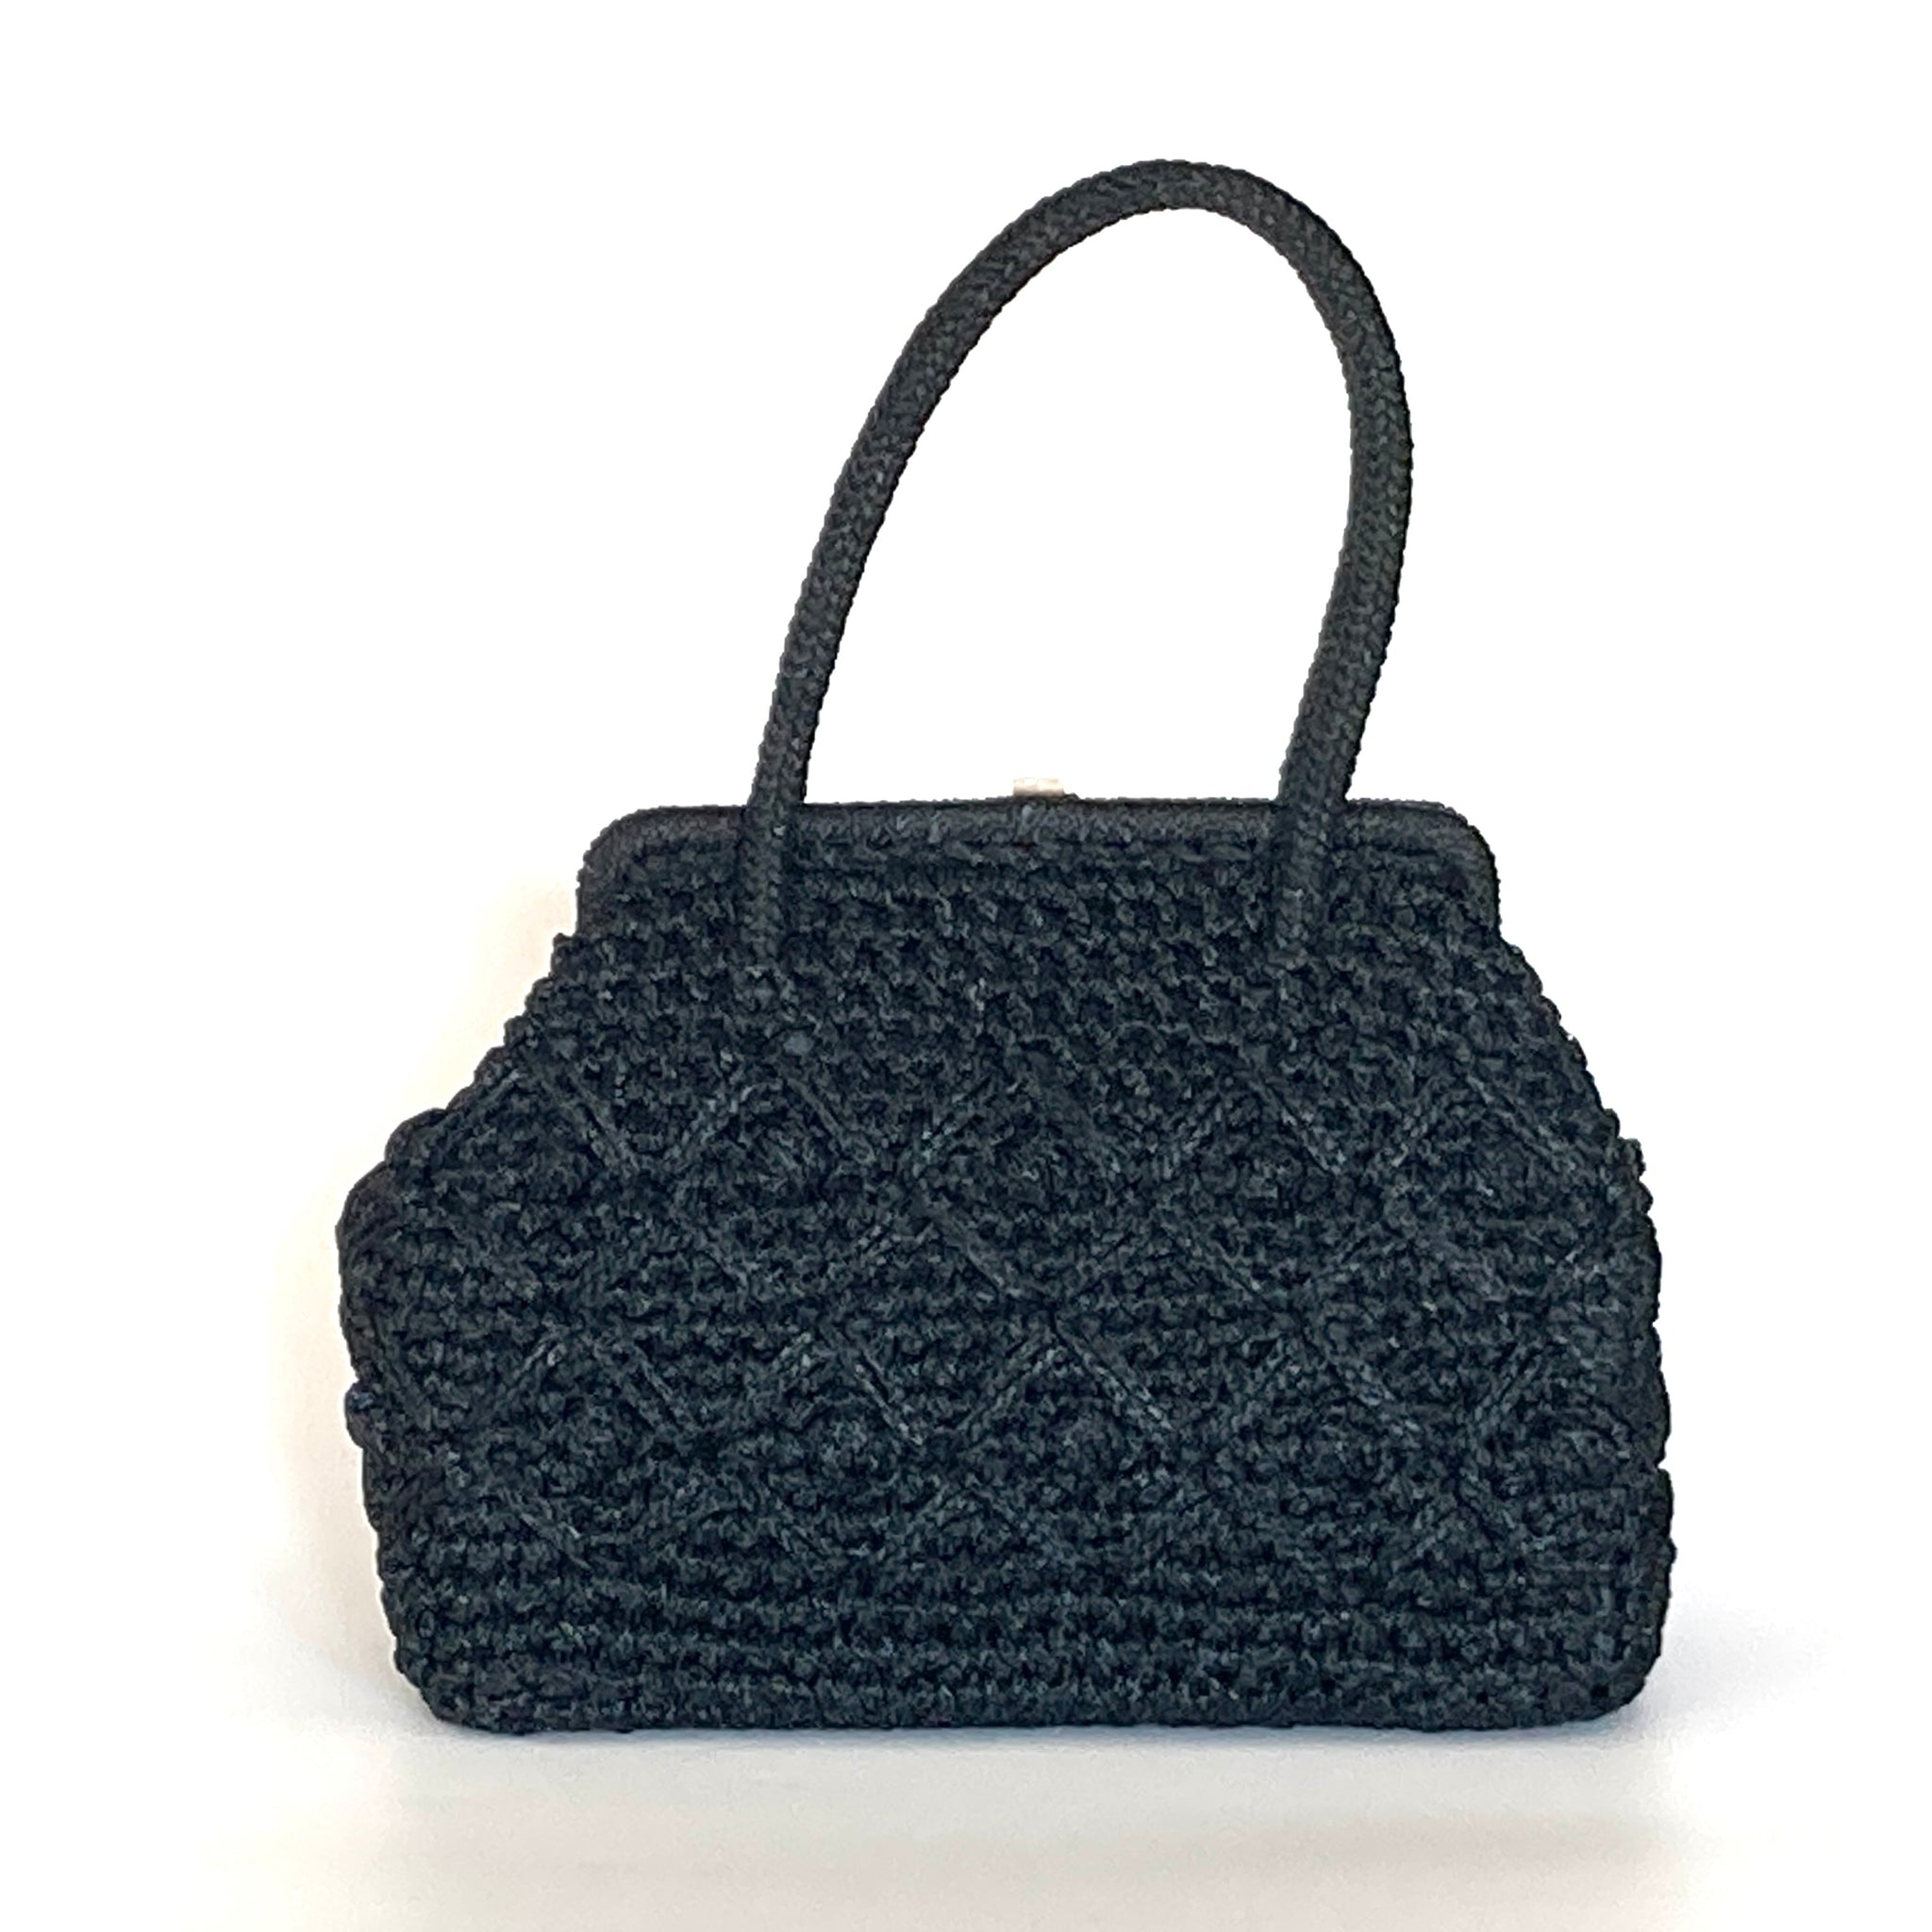 Shaded Black Crochet Bag